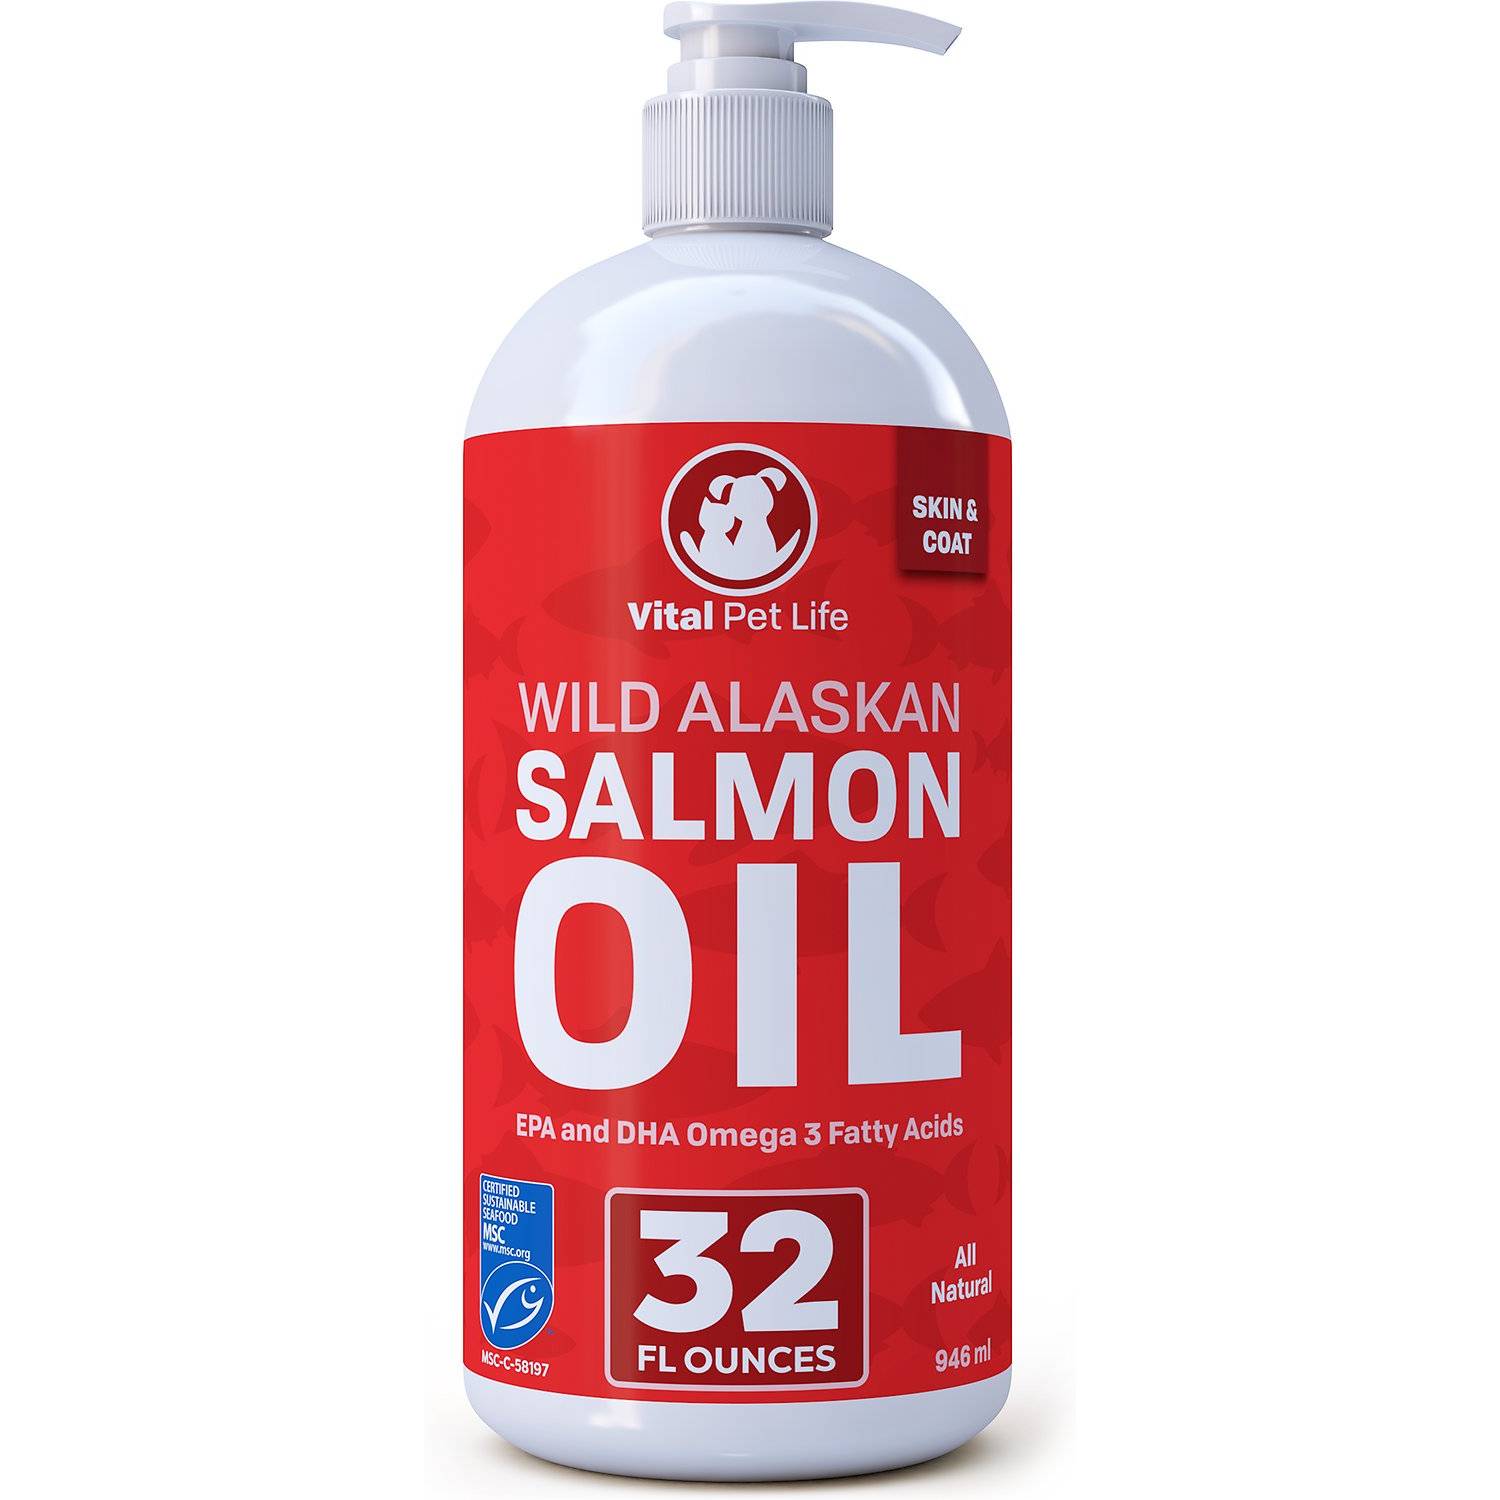 Vital Pet Life Wild Alaskan Salmon Oil Supplement (1)